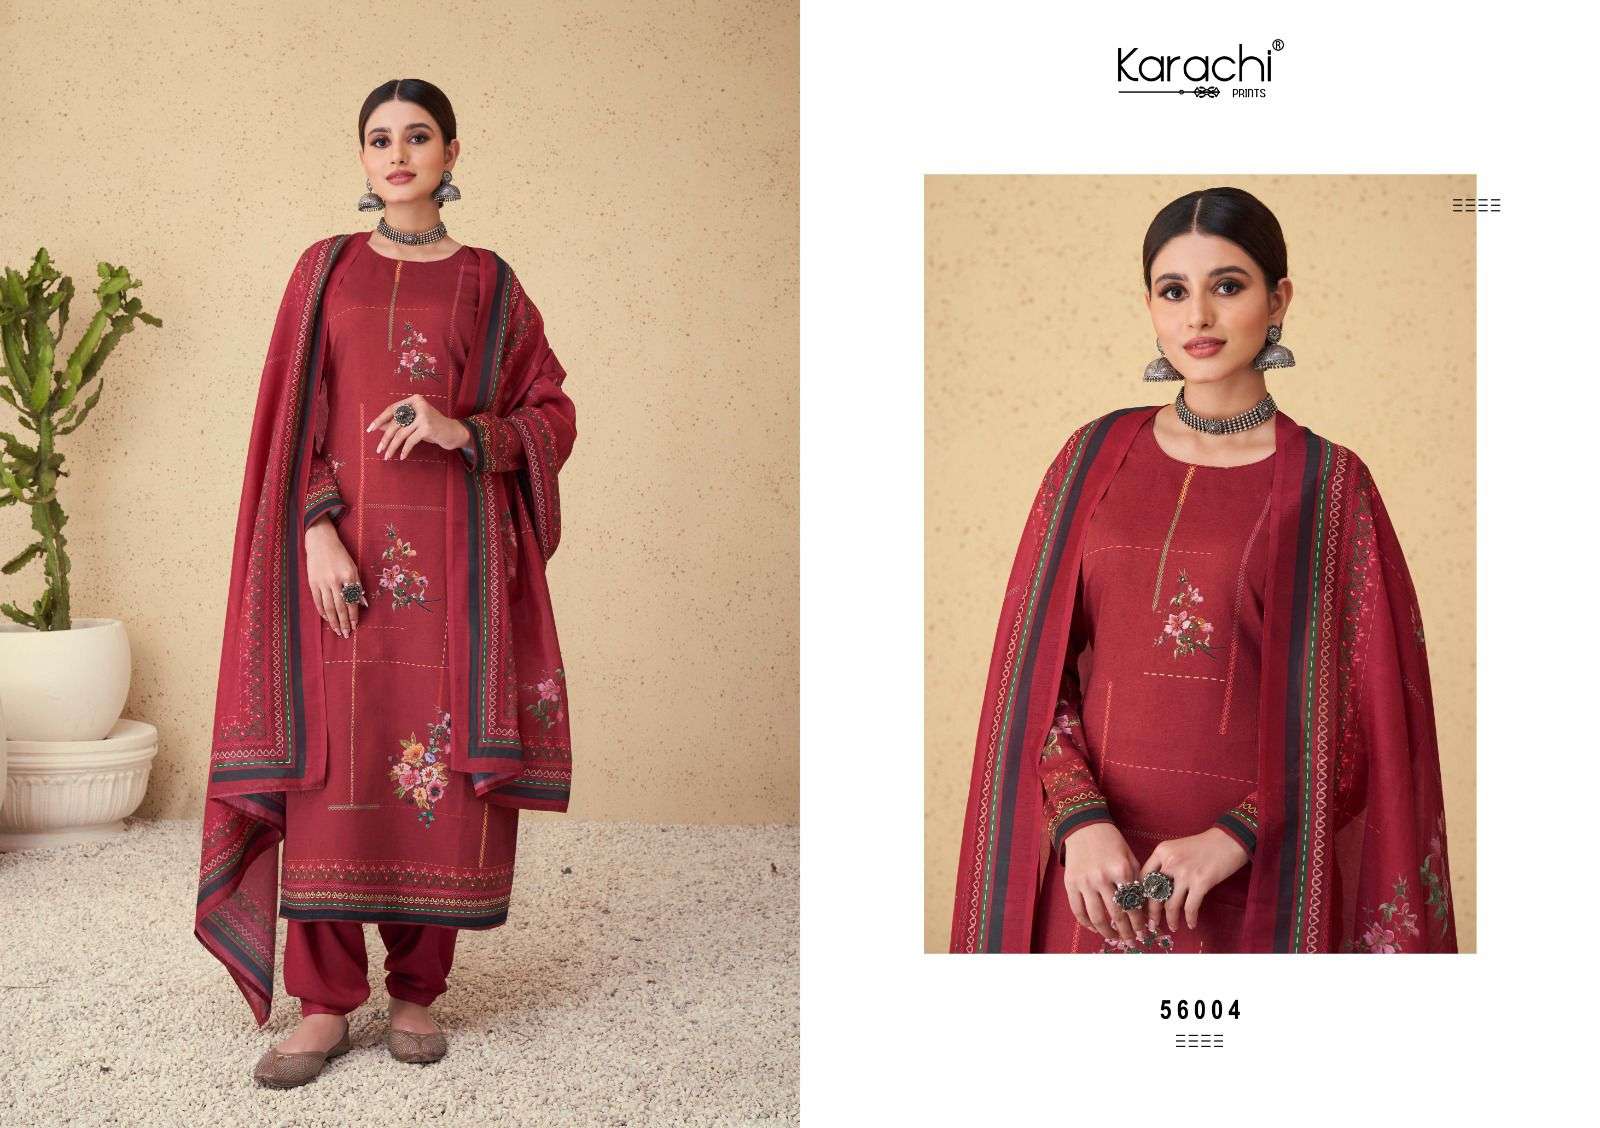 karachi prints floral valley 56001-56006 series digital print with work designer salwar suits